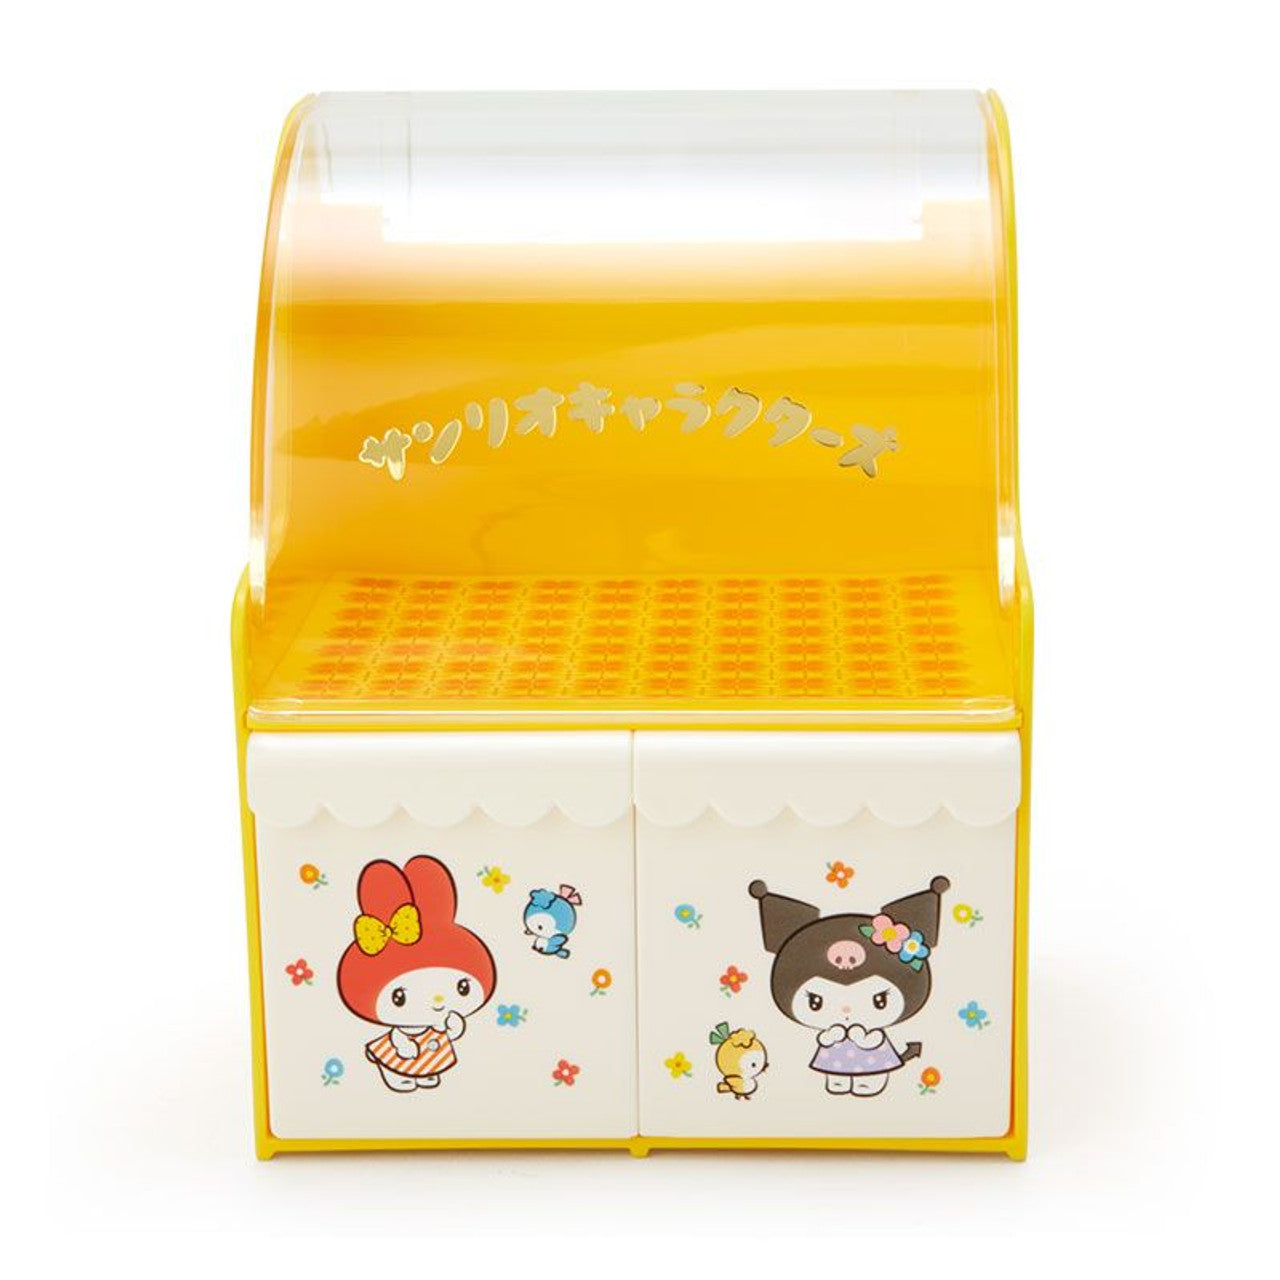 Sanrio Characters Mini Yellow Storage Chest (Retro Room Series) Home Goods Sanrio Original   